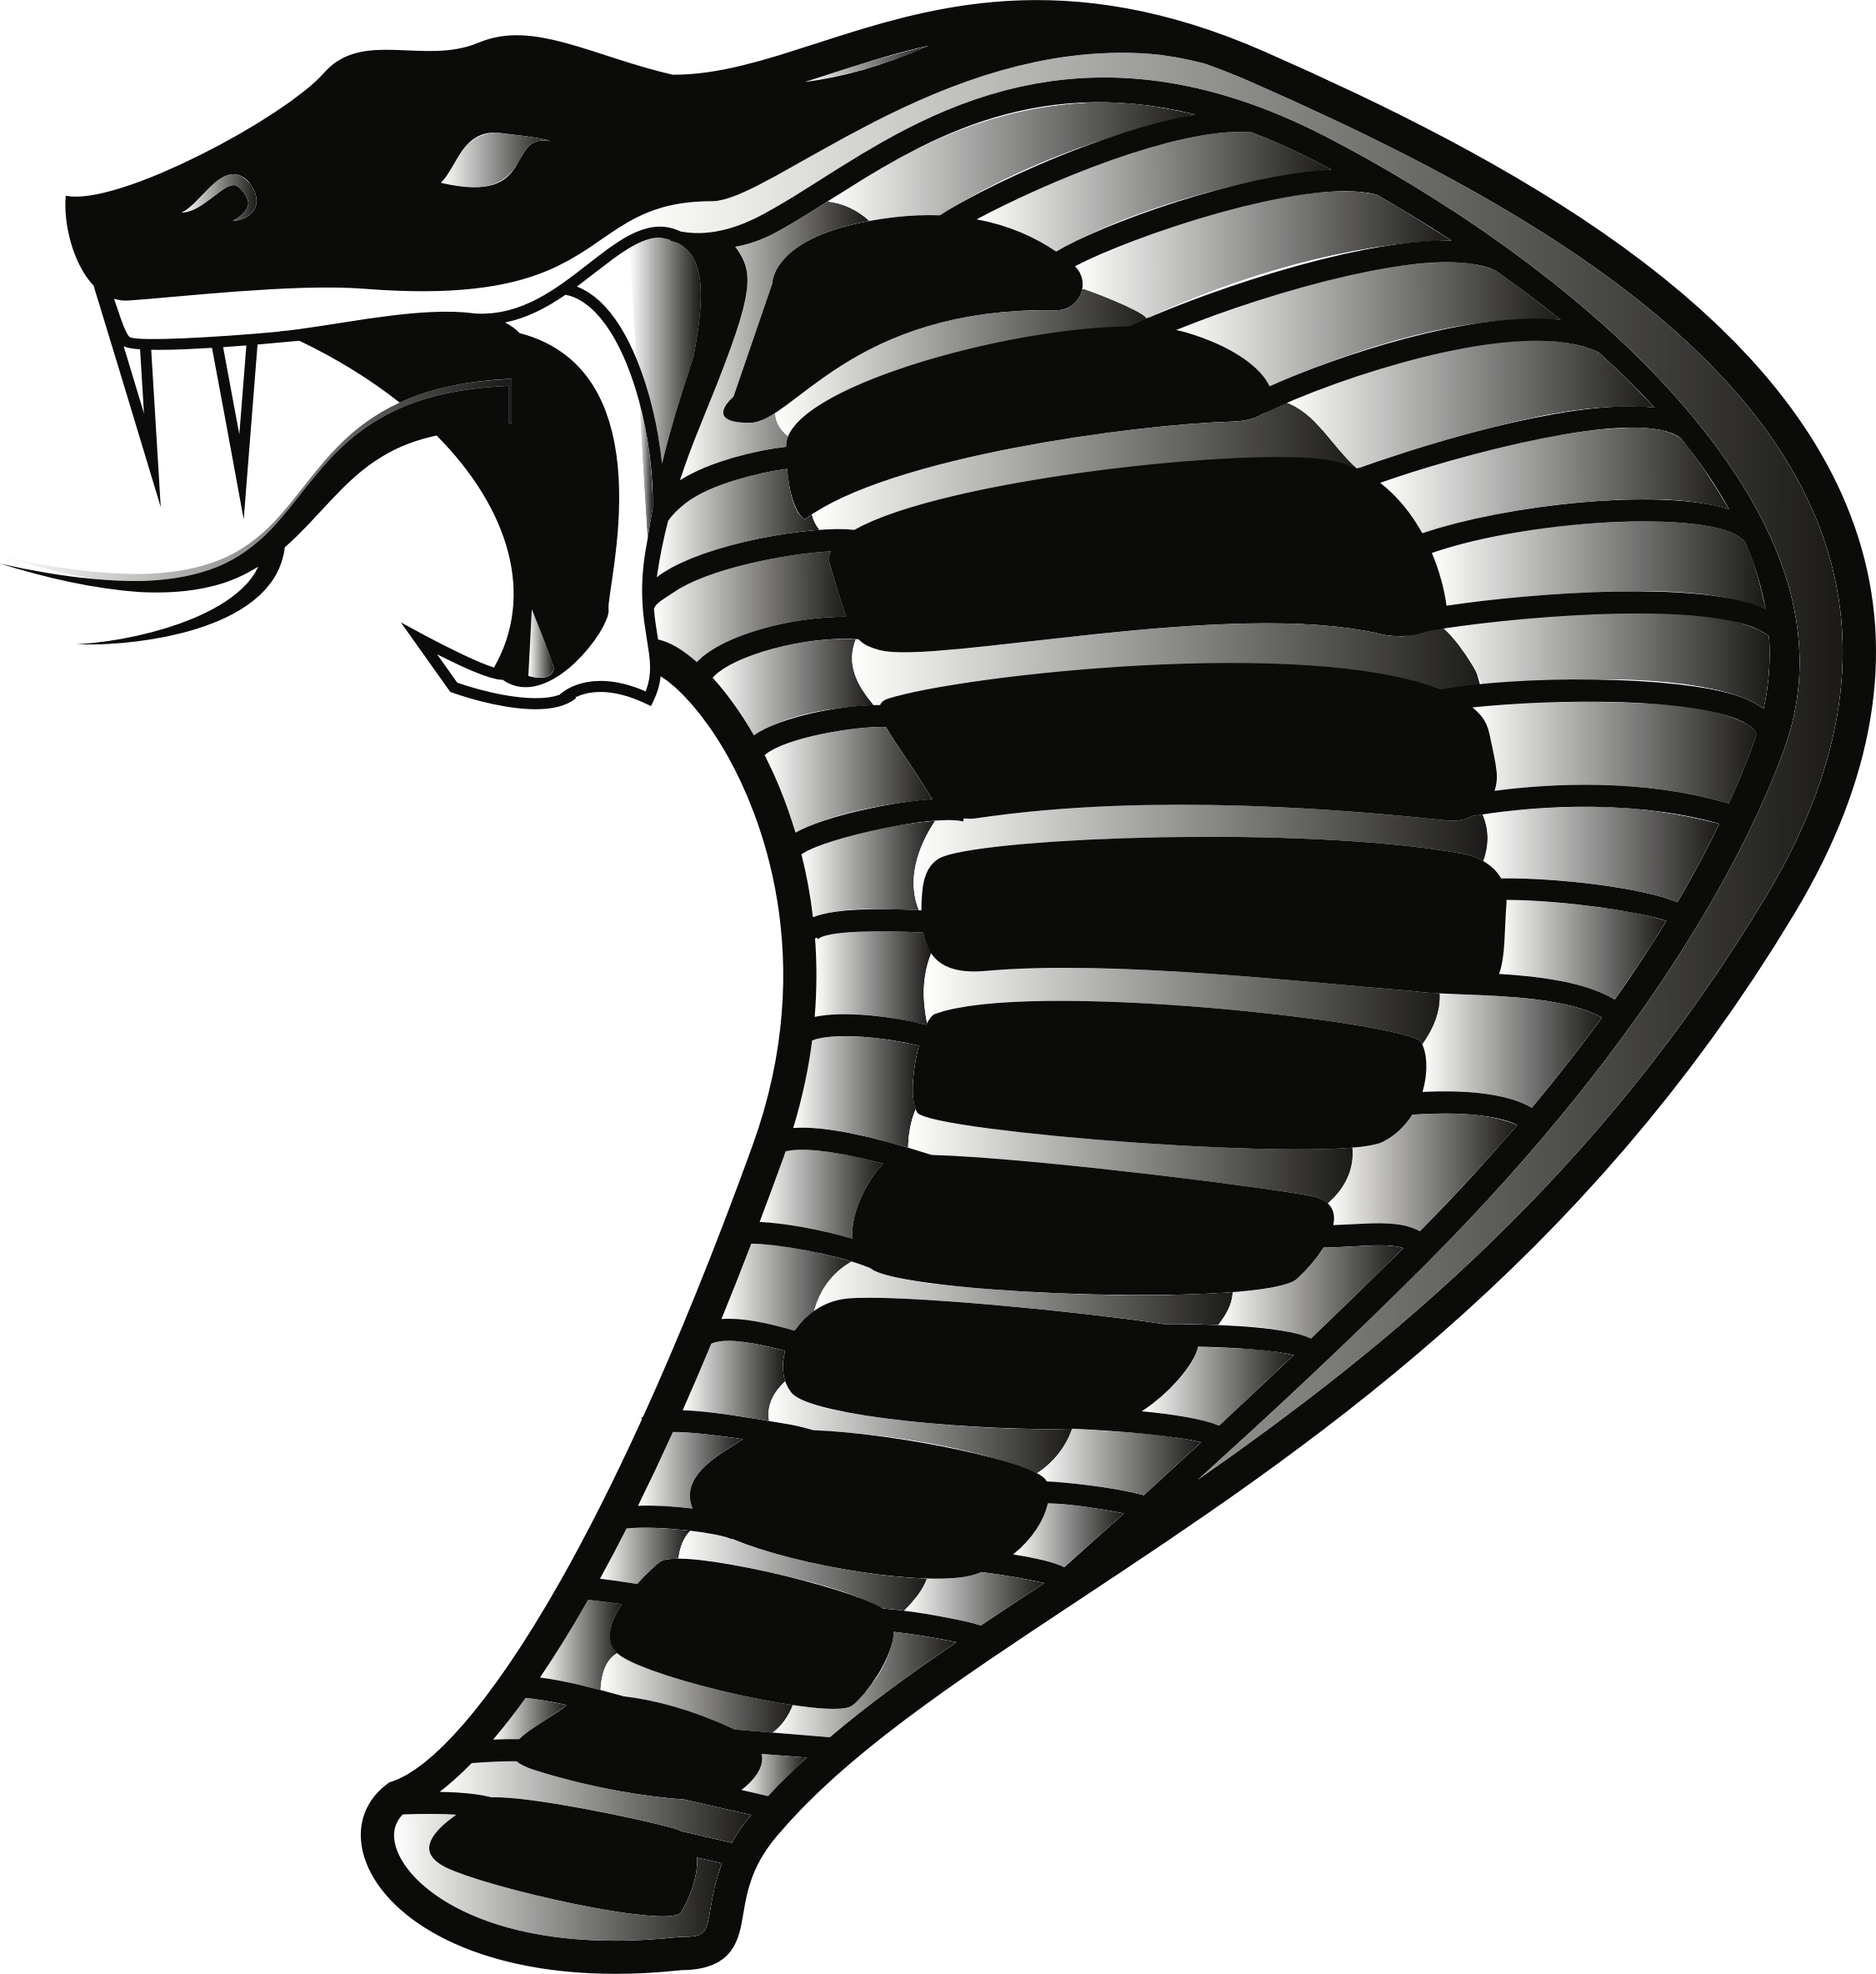 A Black And White Image Of A Cobra